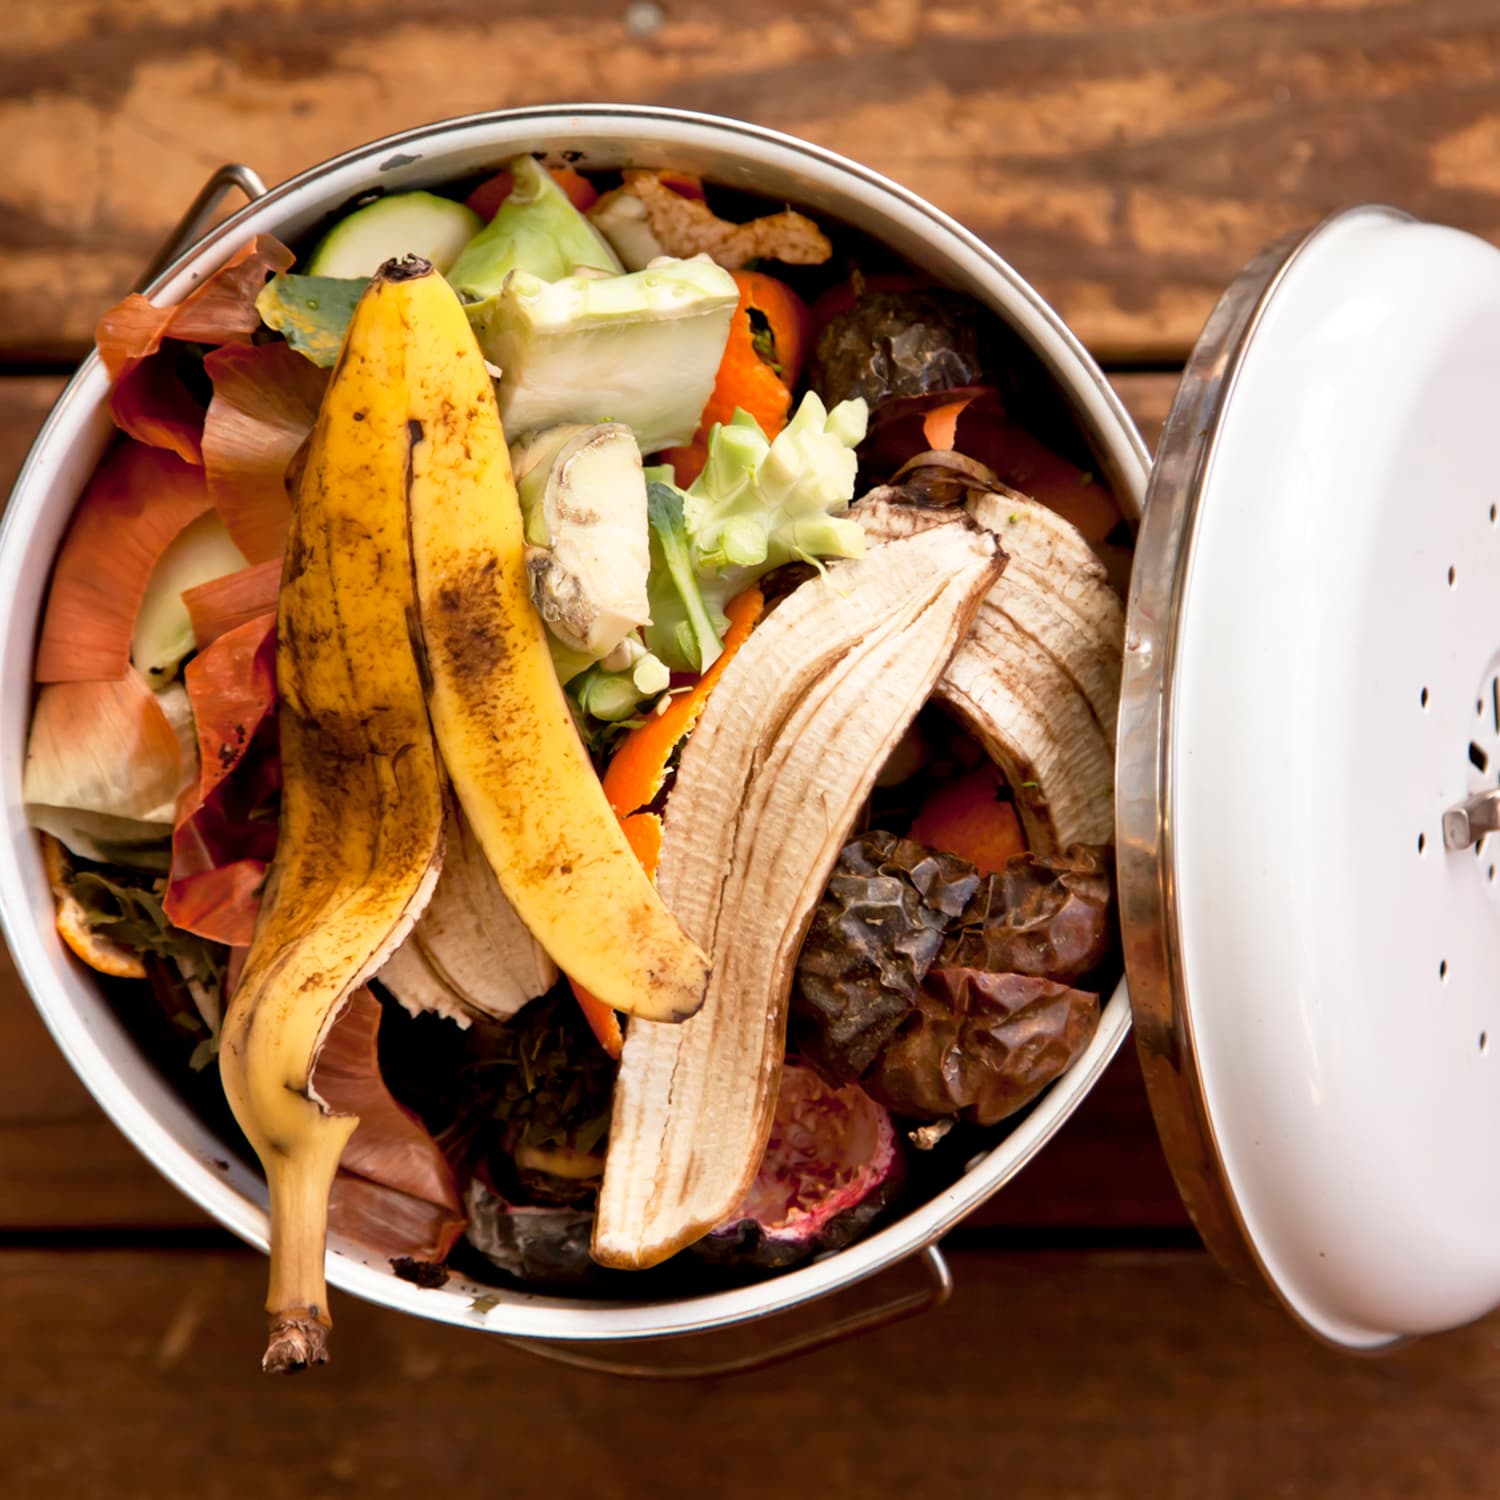 The 12 Best Countertop Compost Bins To Buy - Epic Gardening